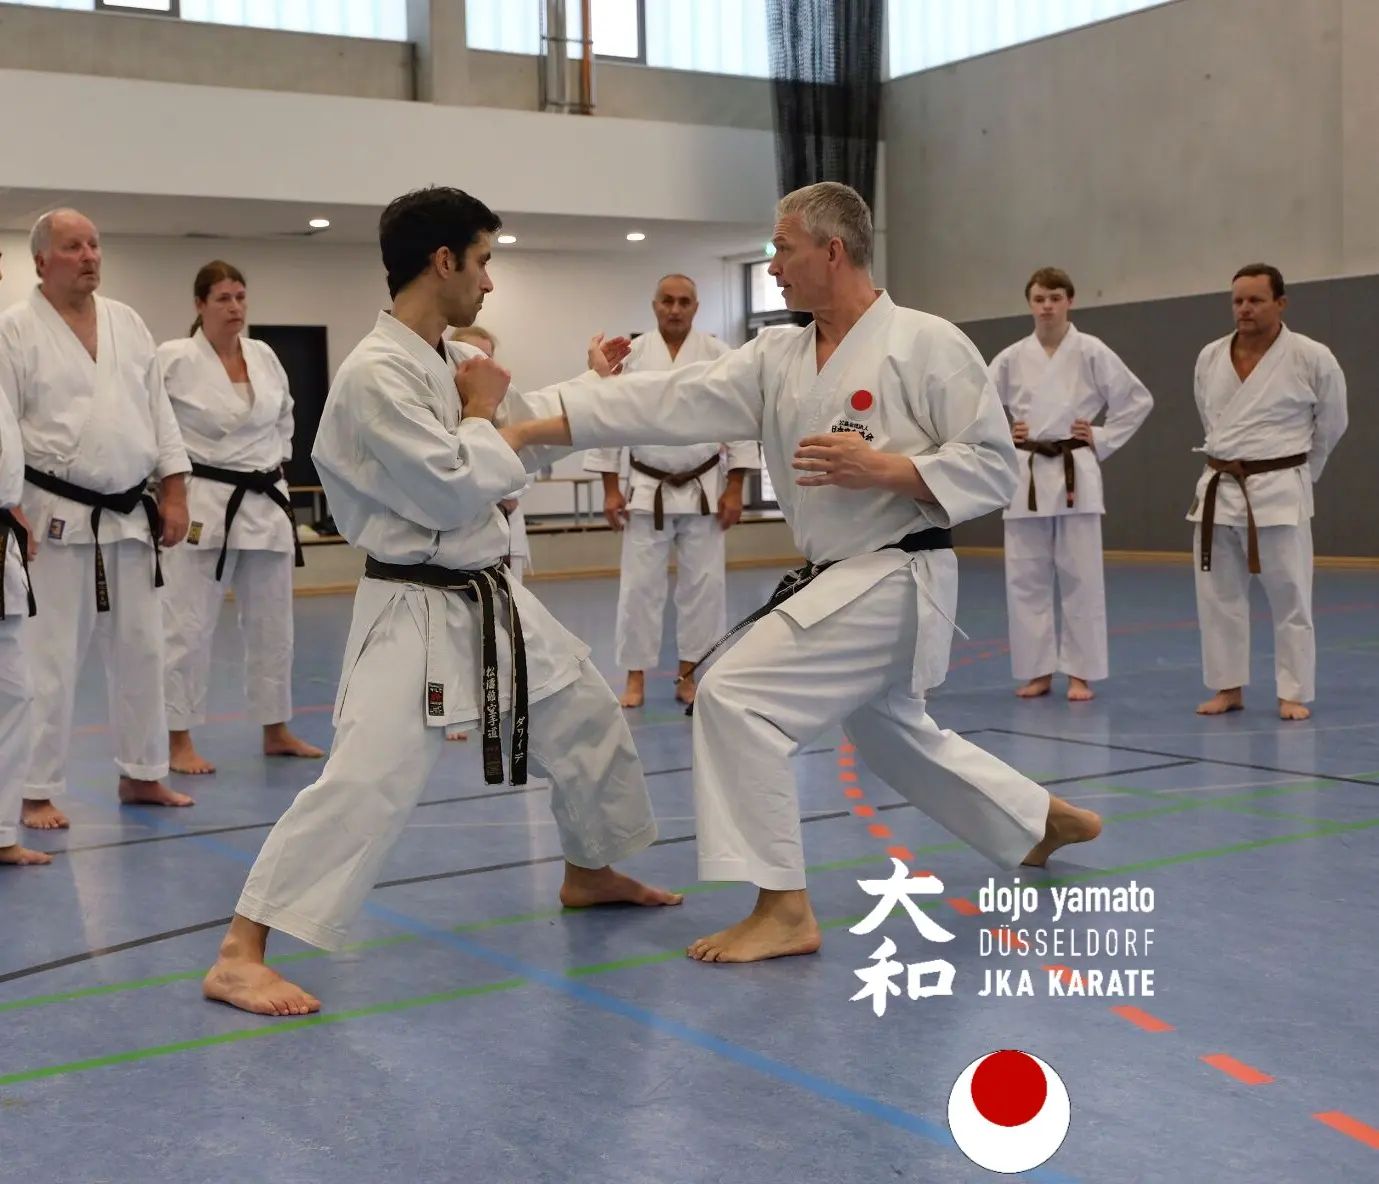 Lehrgang im Dojo Yamato Düsseldorf e.V.🥋 mit unseren Trainern Keigo Shimizu 🇯🇵und Thomas Prediger 🇩🇪
.
.
.
.
.
.
#karate #training #fun #jka #djkb #kihon #kata #kumite #düsseldorf #duesseldorf #japan #sport #sportmotivation #shotokan #traditional #nrw #yamatoduesseldorf #fitness #fitnessmotivation #jkaKarate #jkakaratedo #neuss #ratingen #hilden #leverkusen #kaarst #selbstbstbewusstsein #selbstvertrauen